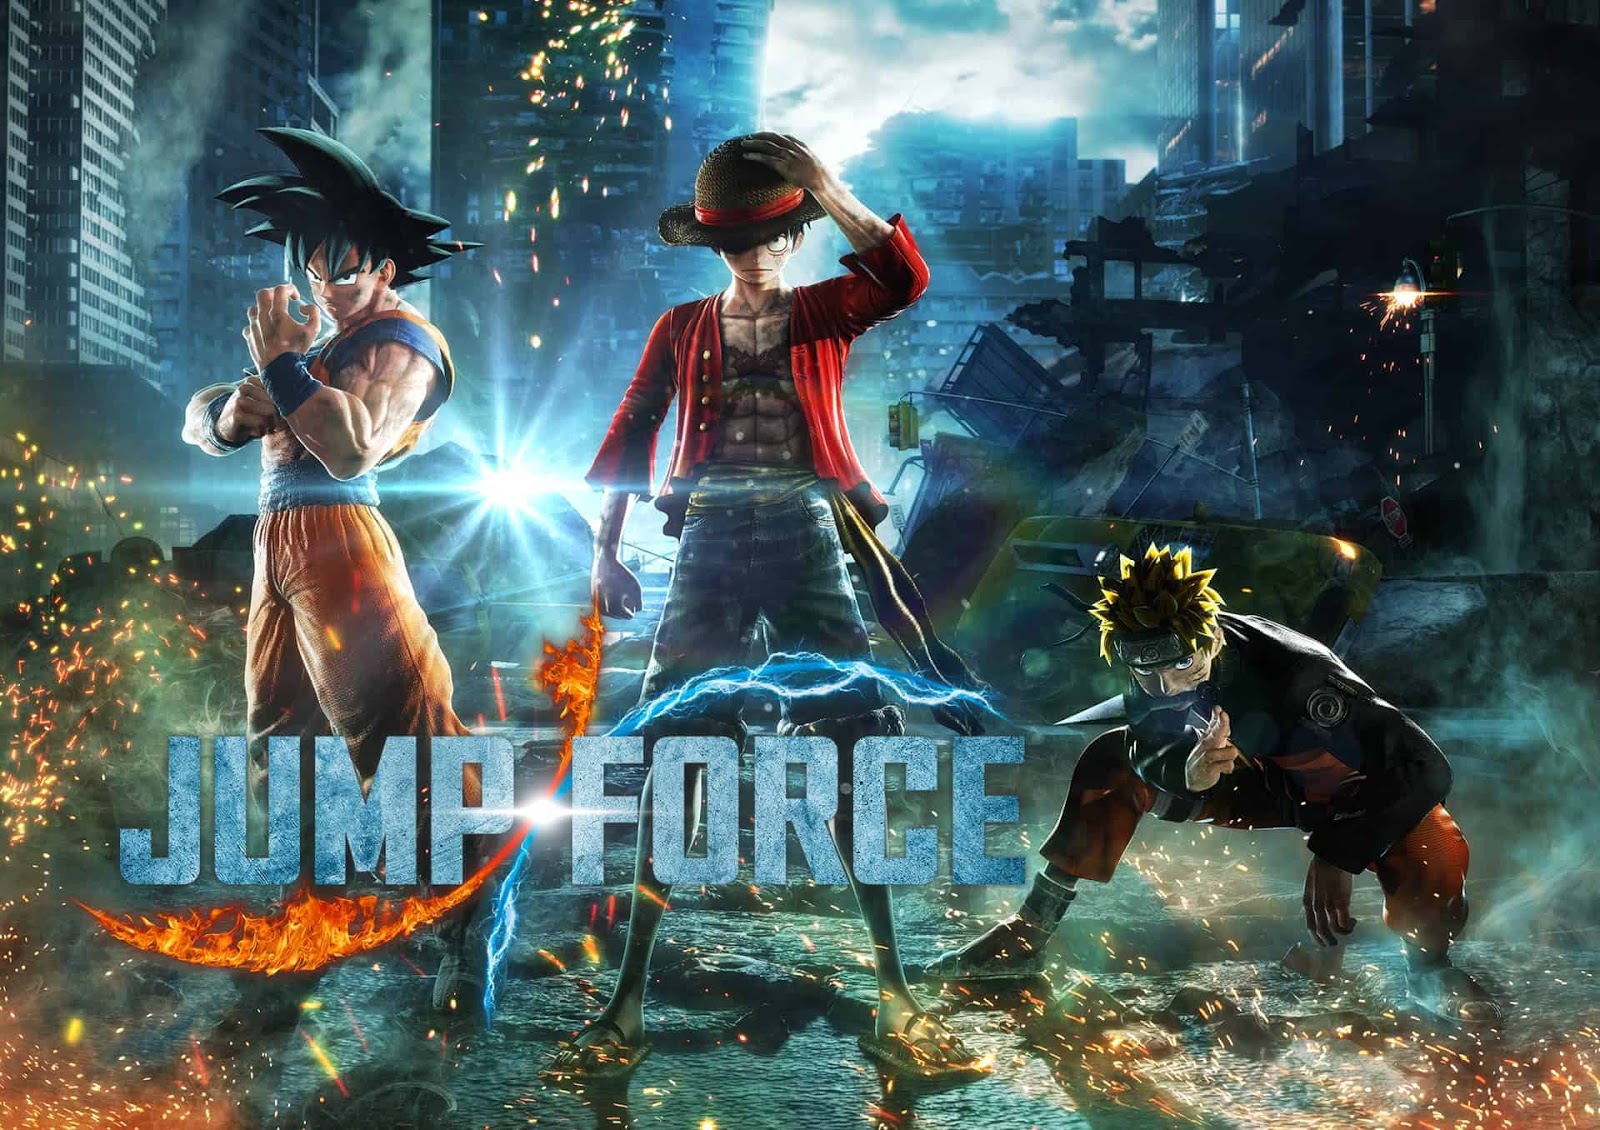 Jump Force (Multi) e a tentativa de retratar animes com realismo - GameBlast